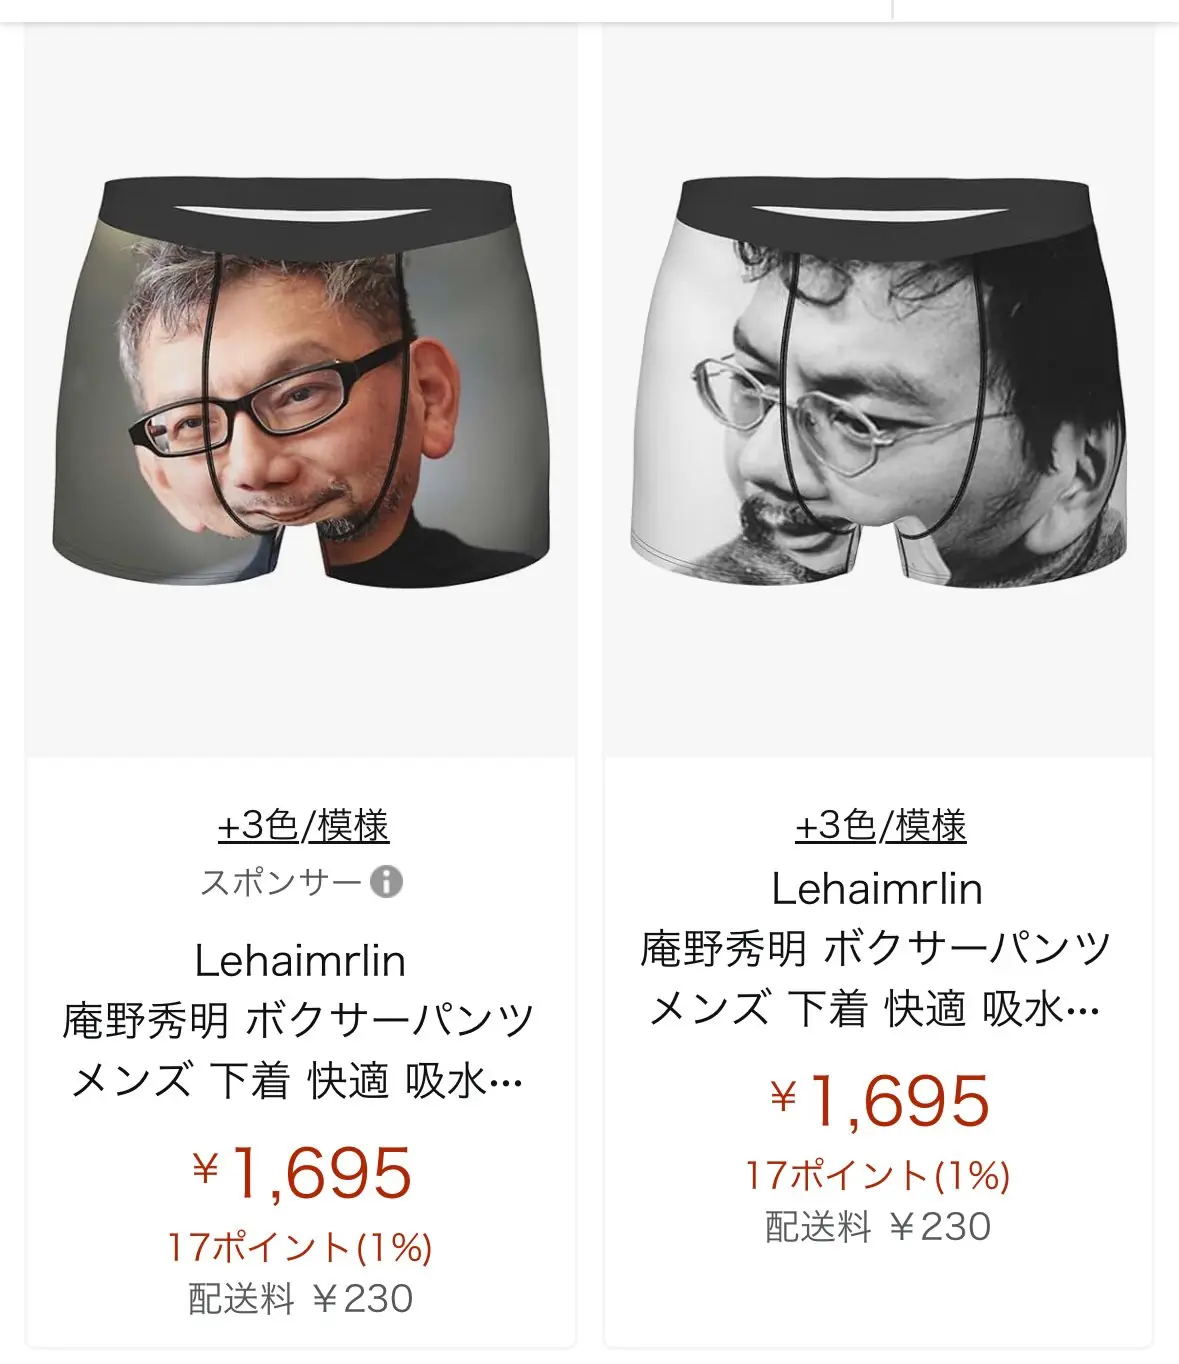 Hideaki Anno tiene su rostro impreso en ropa interior